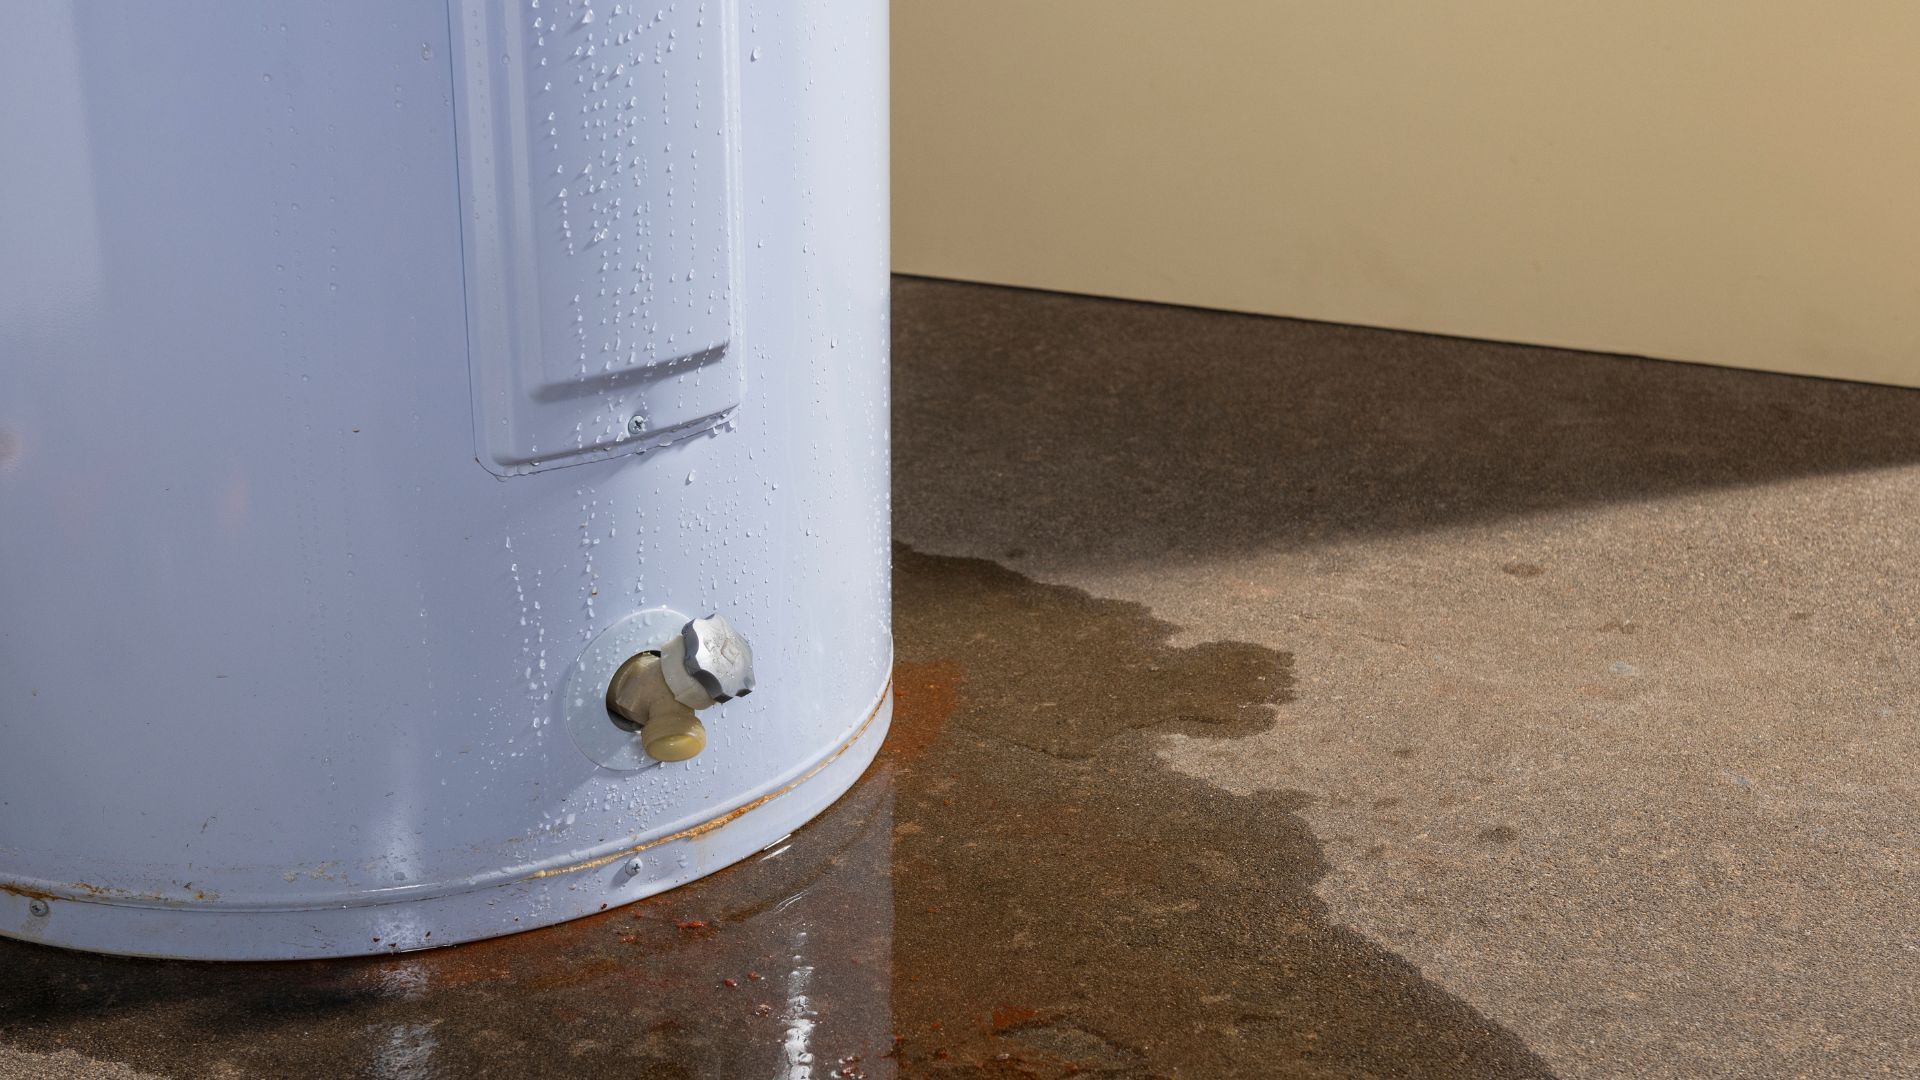 Leaks in Hot Water Tanks Relevant to Plumbers